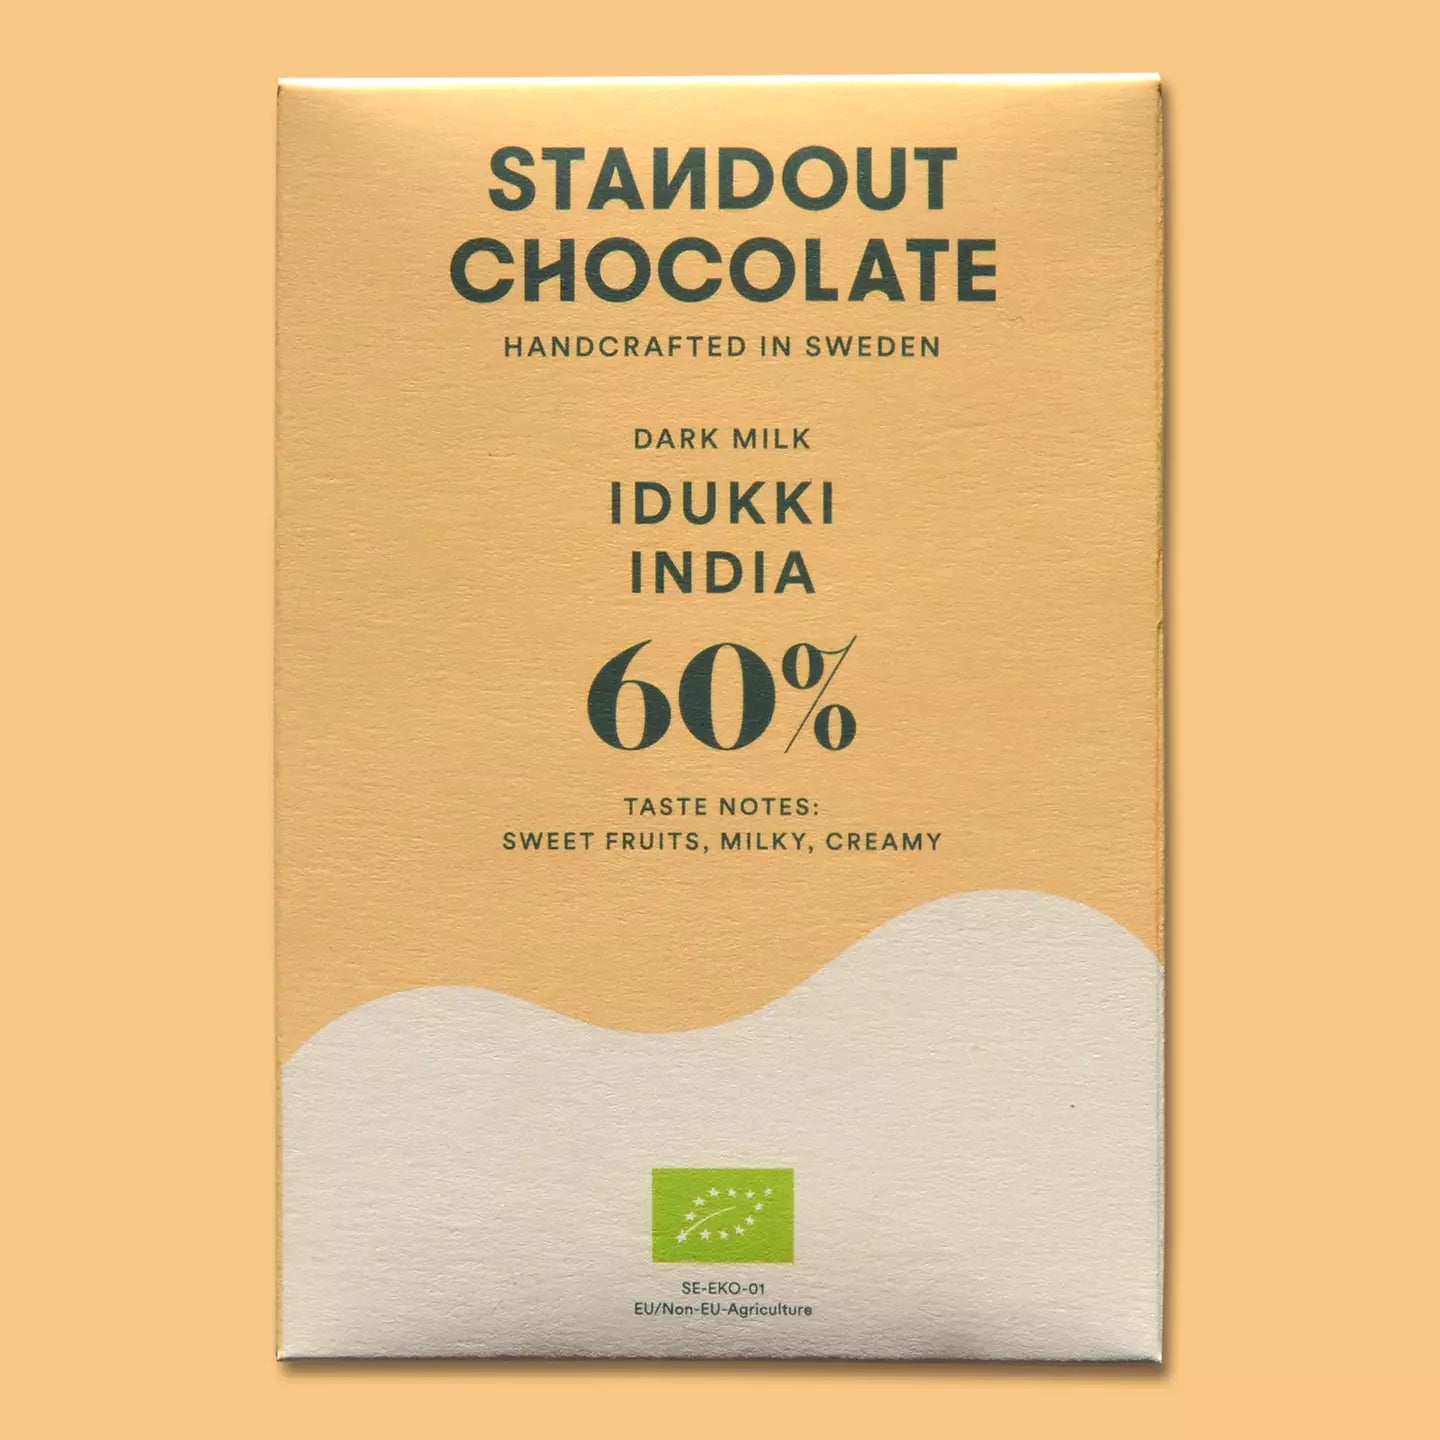 Standout Dark Milk India Idukki 60%